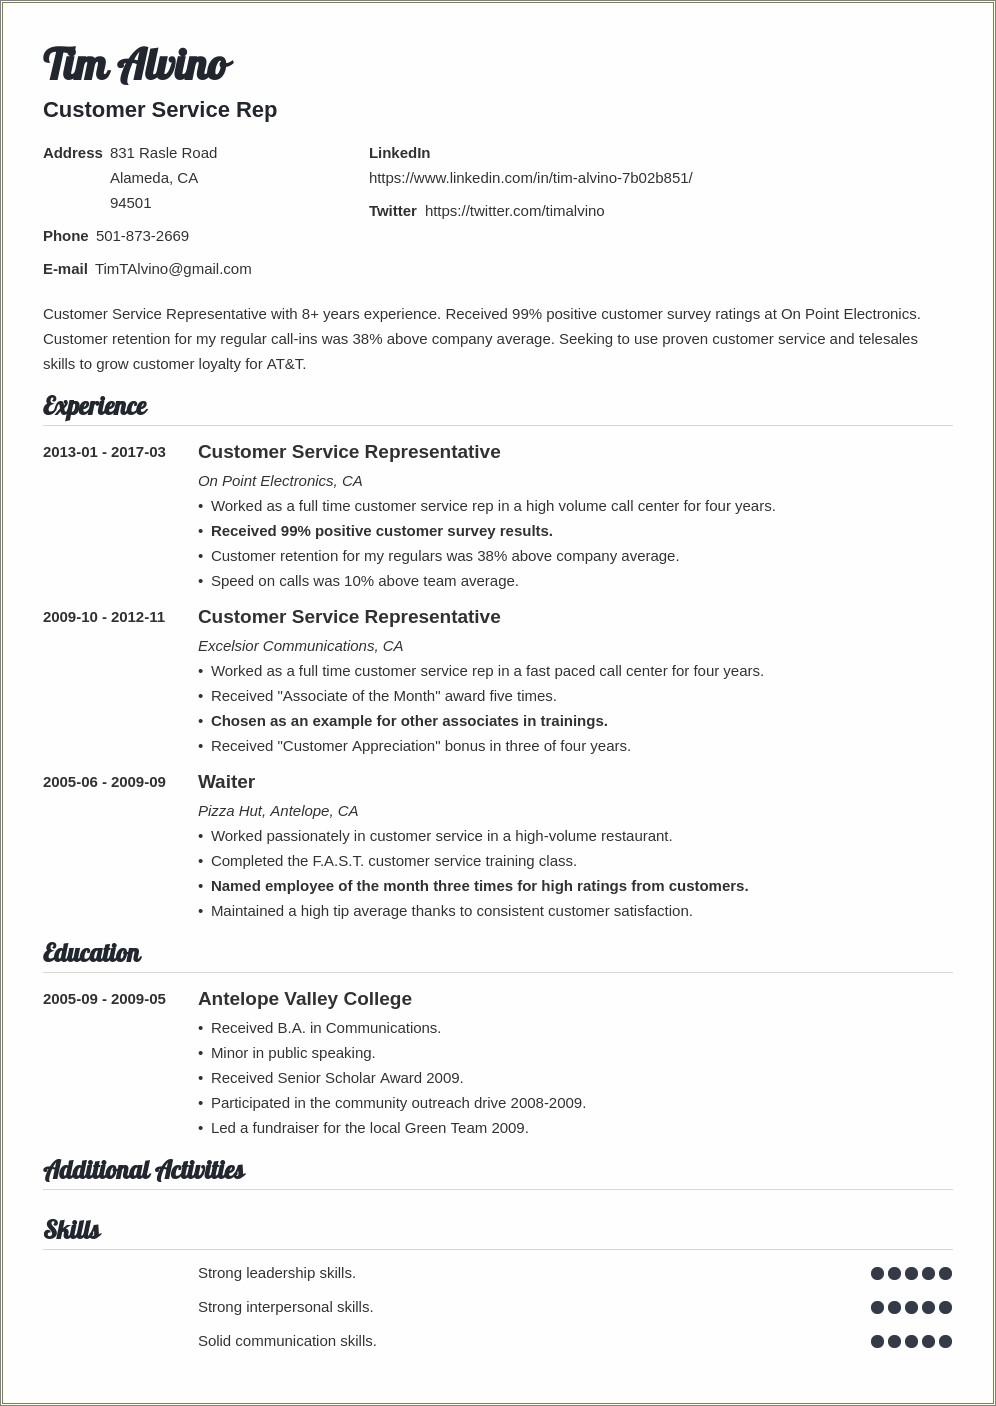 Sample Entry Level Customer Service Resume